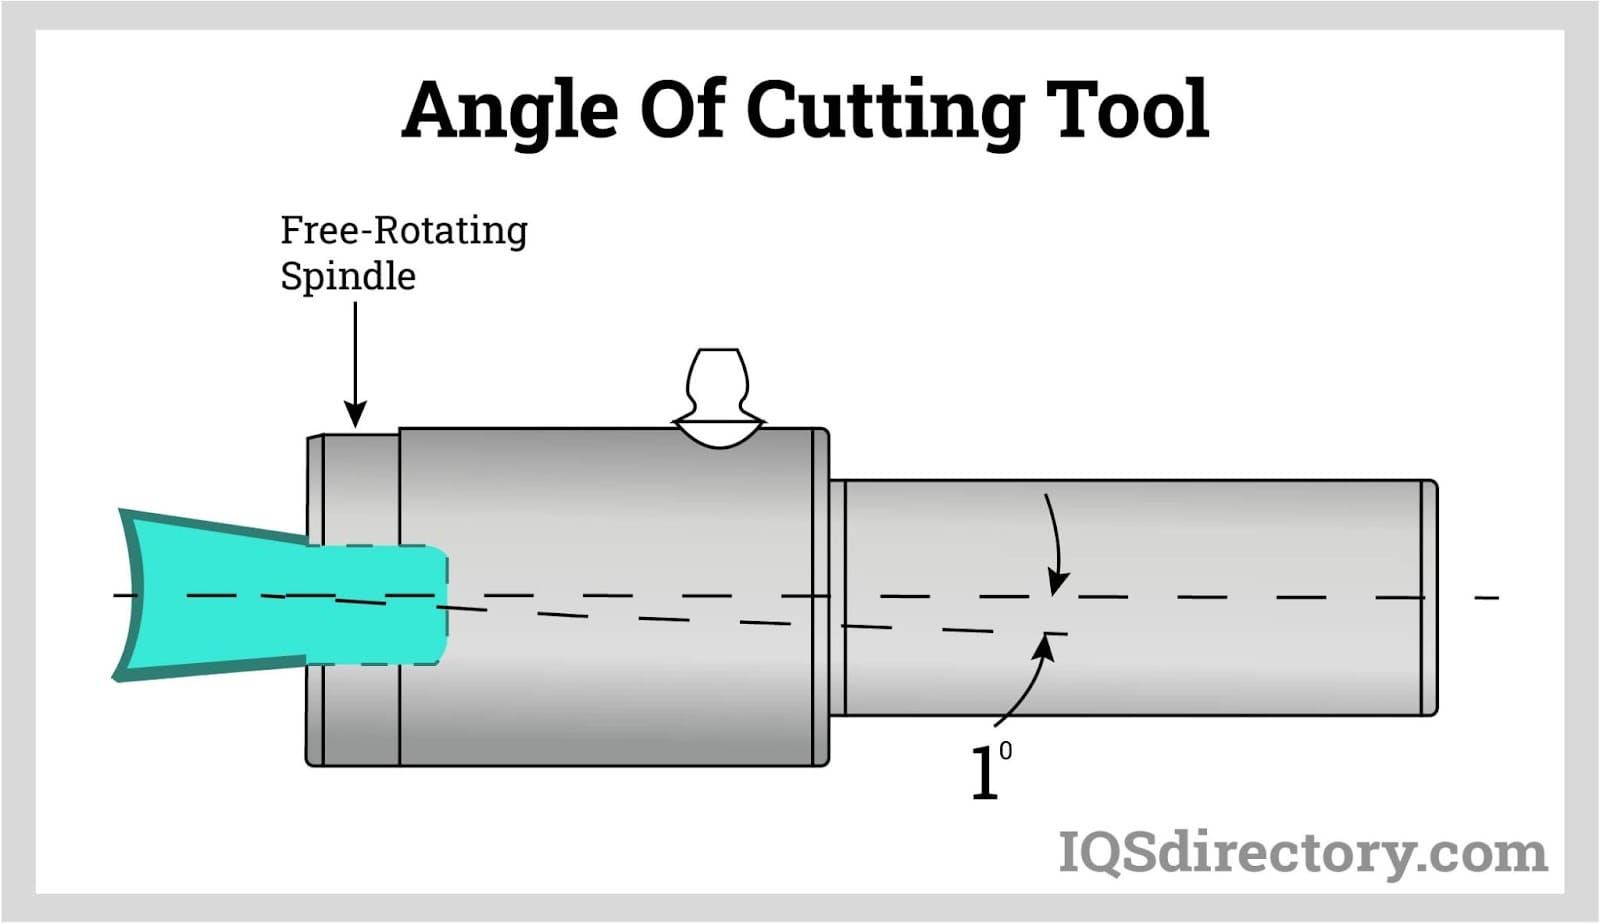 Angle of Cutting Tool